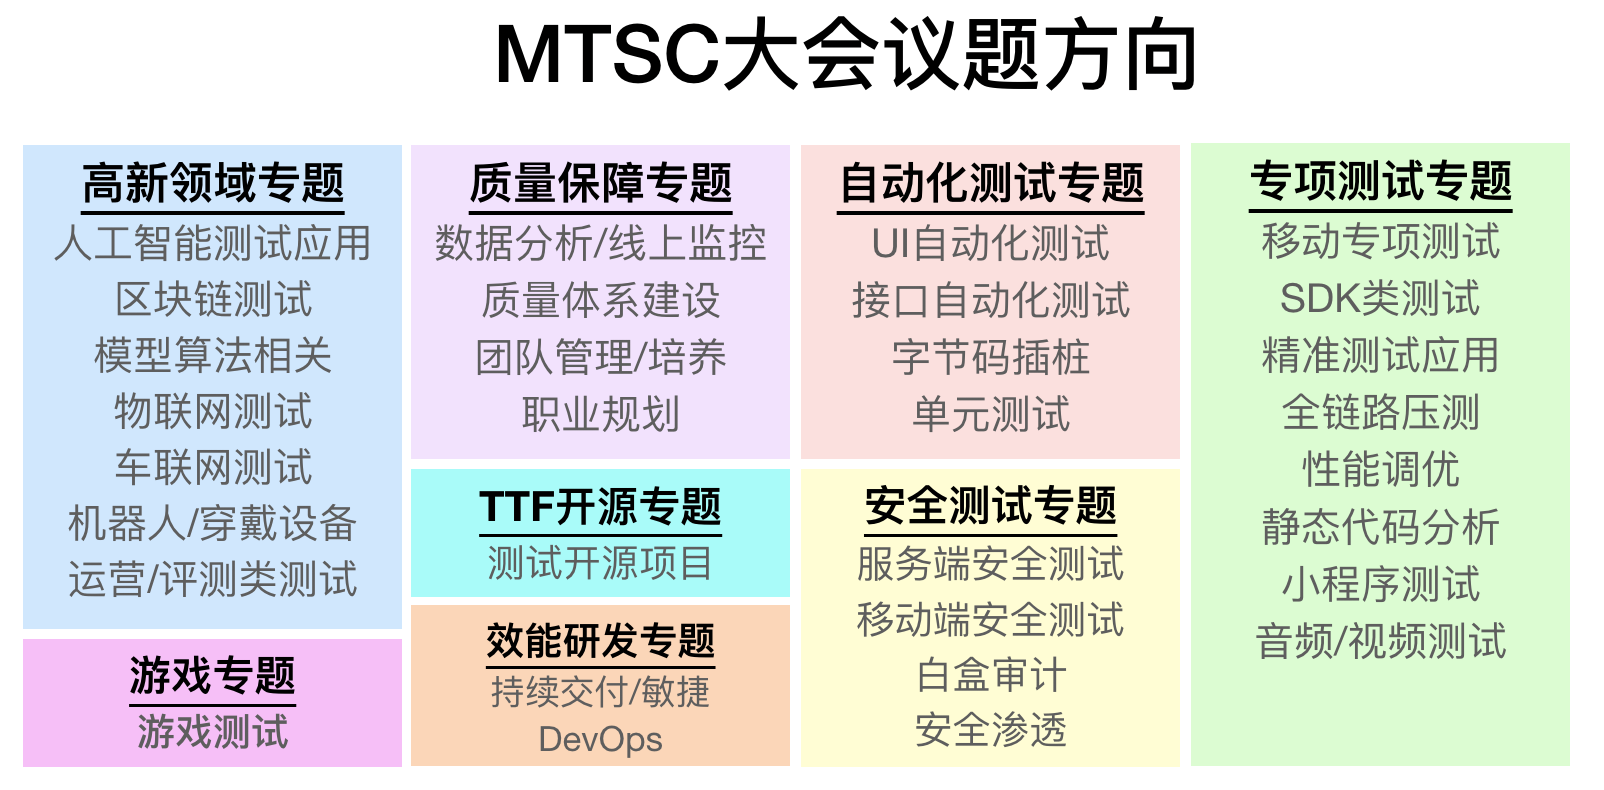 MTSC 2020中国移动互联网测试开发大会